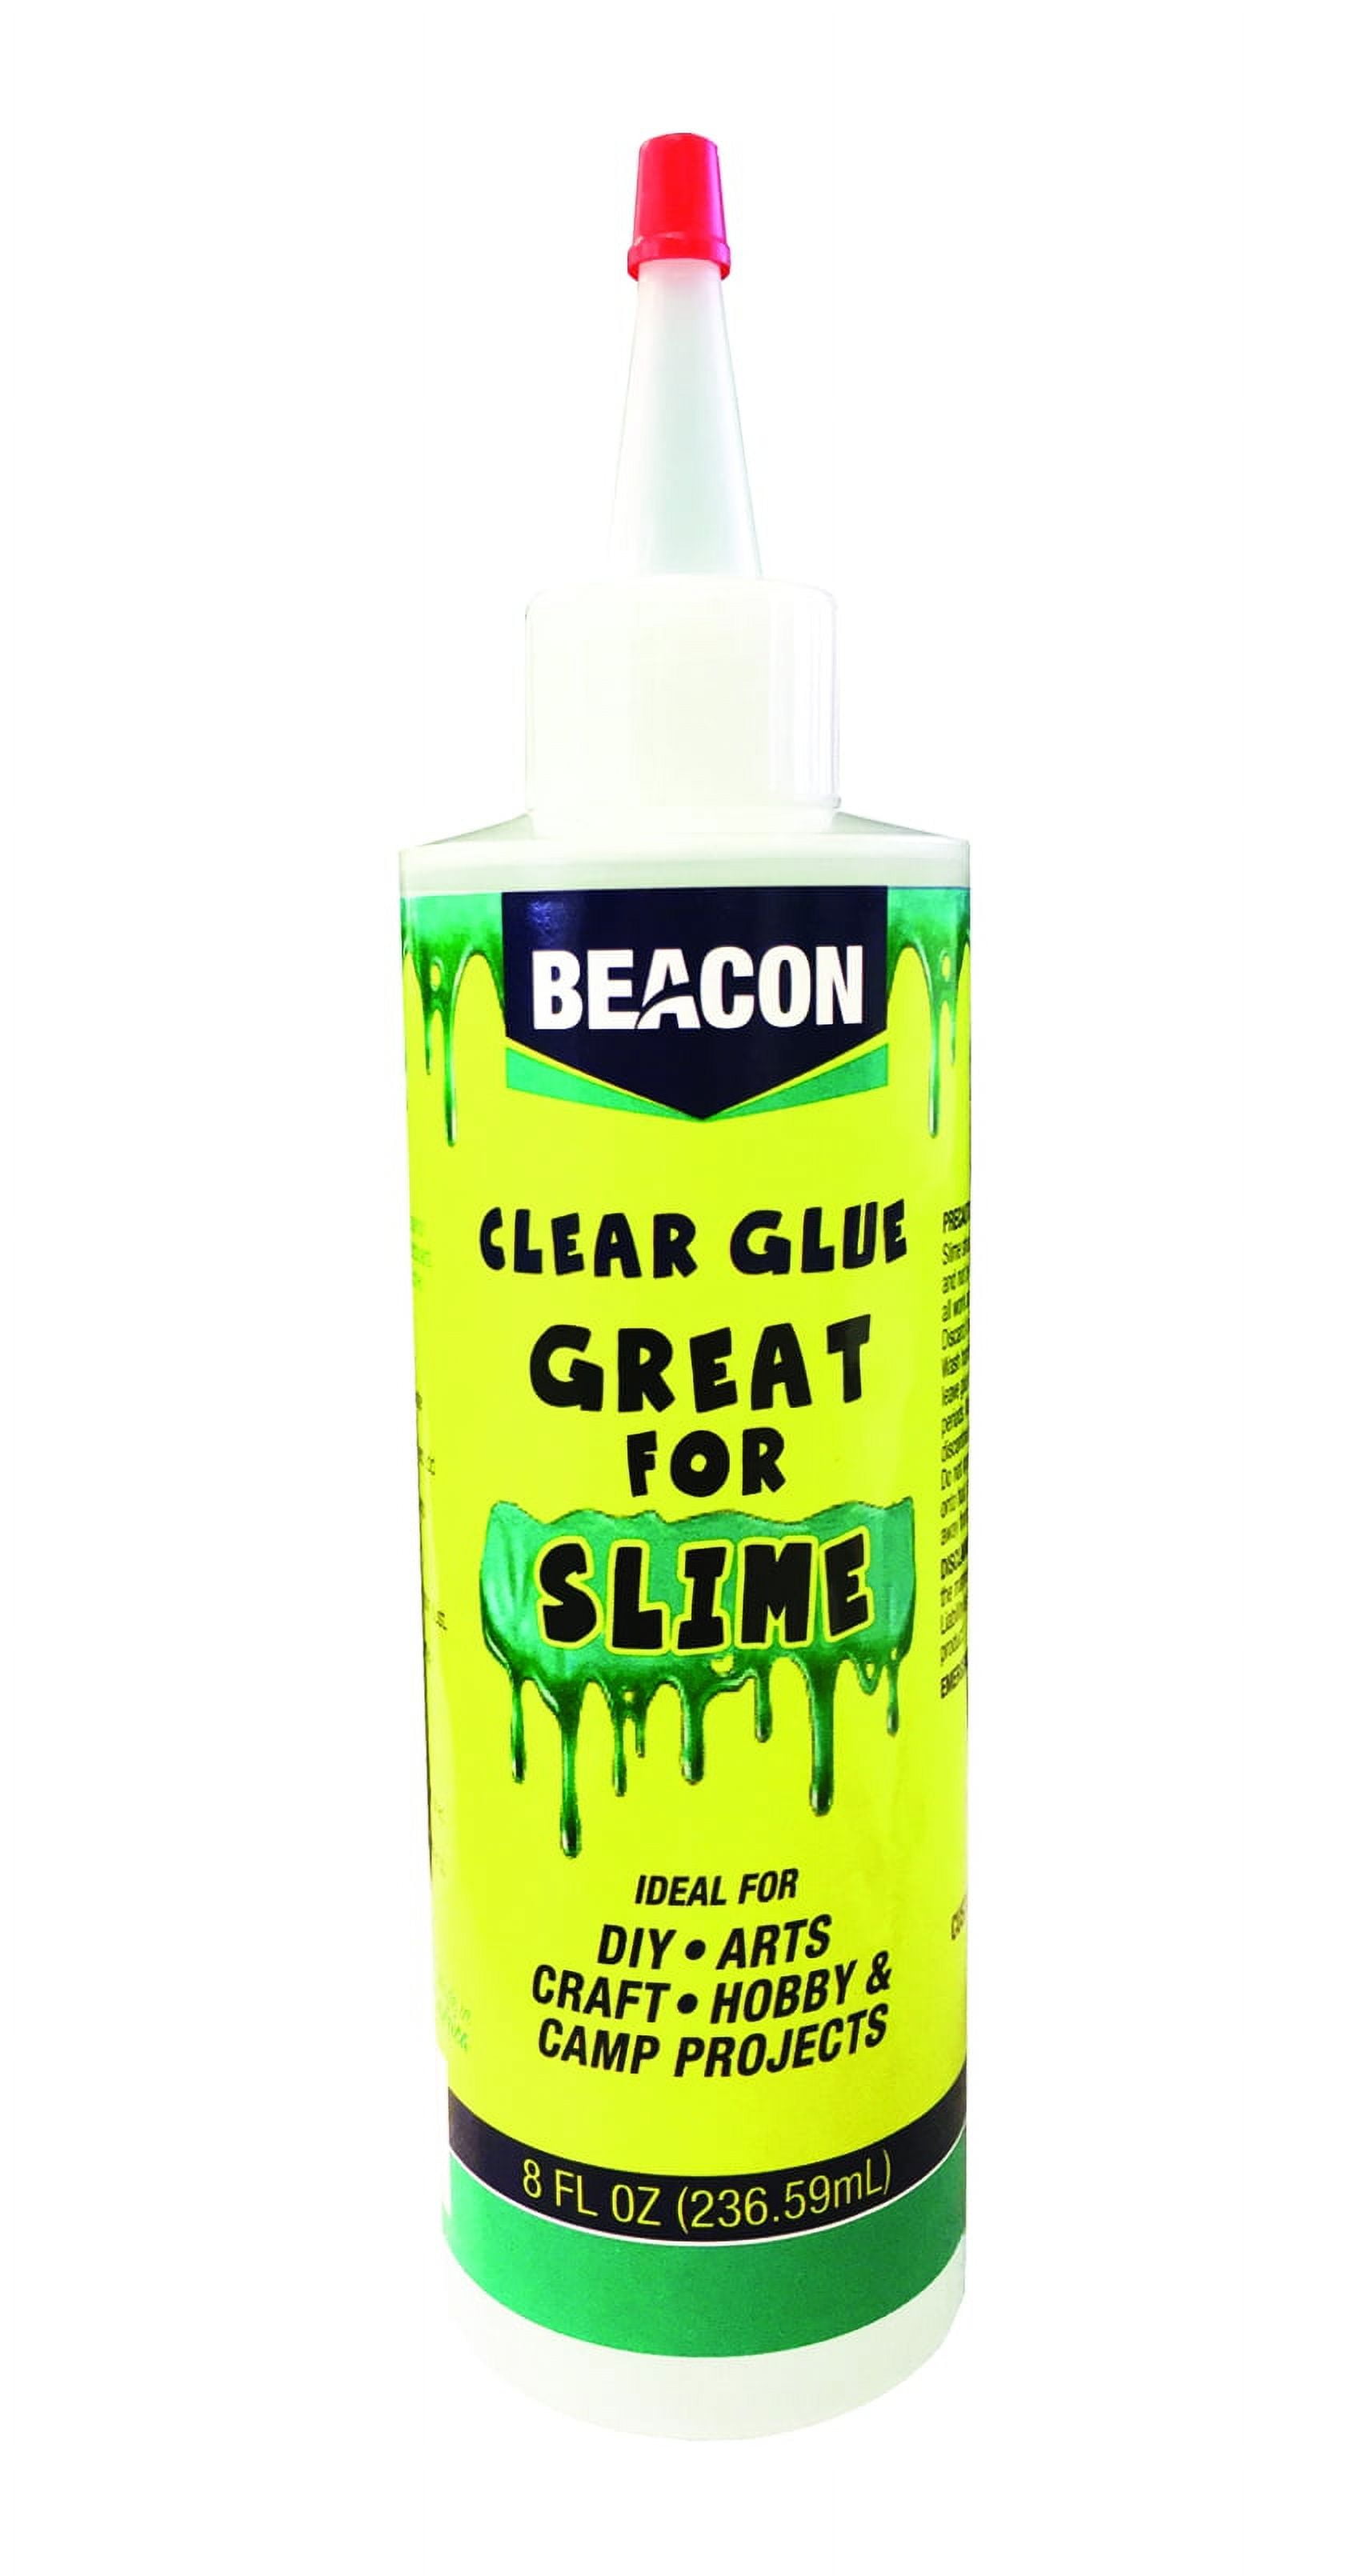 8oz BEACON CLEAR GLUE for SLIME - safe, non-toxic fun craft